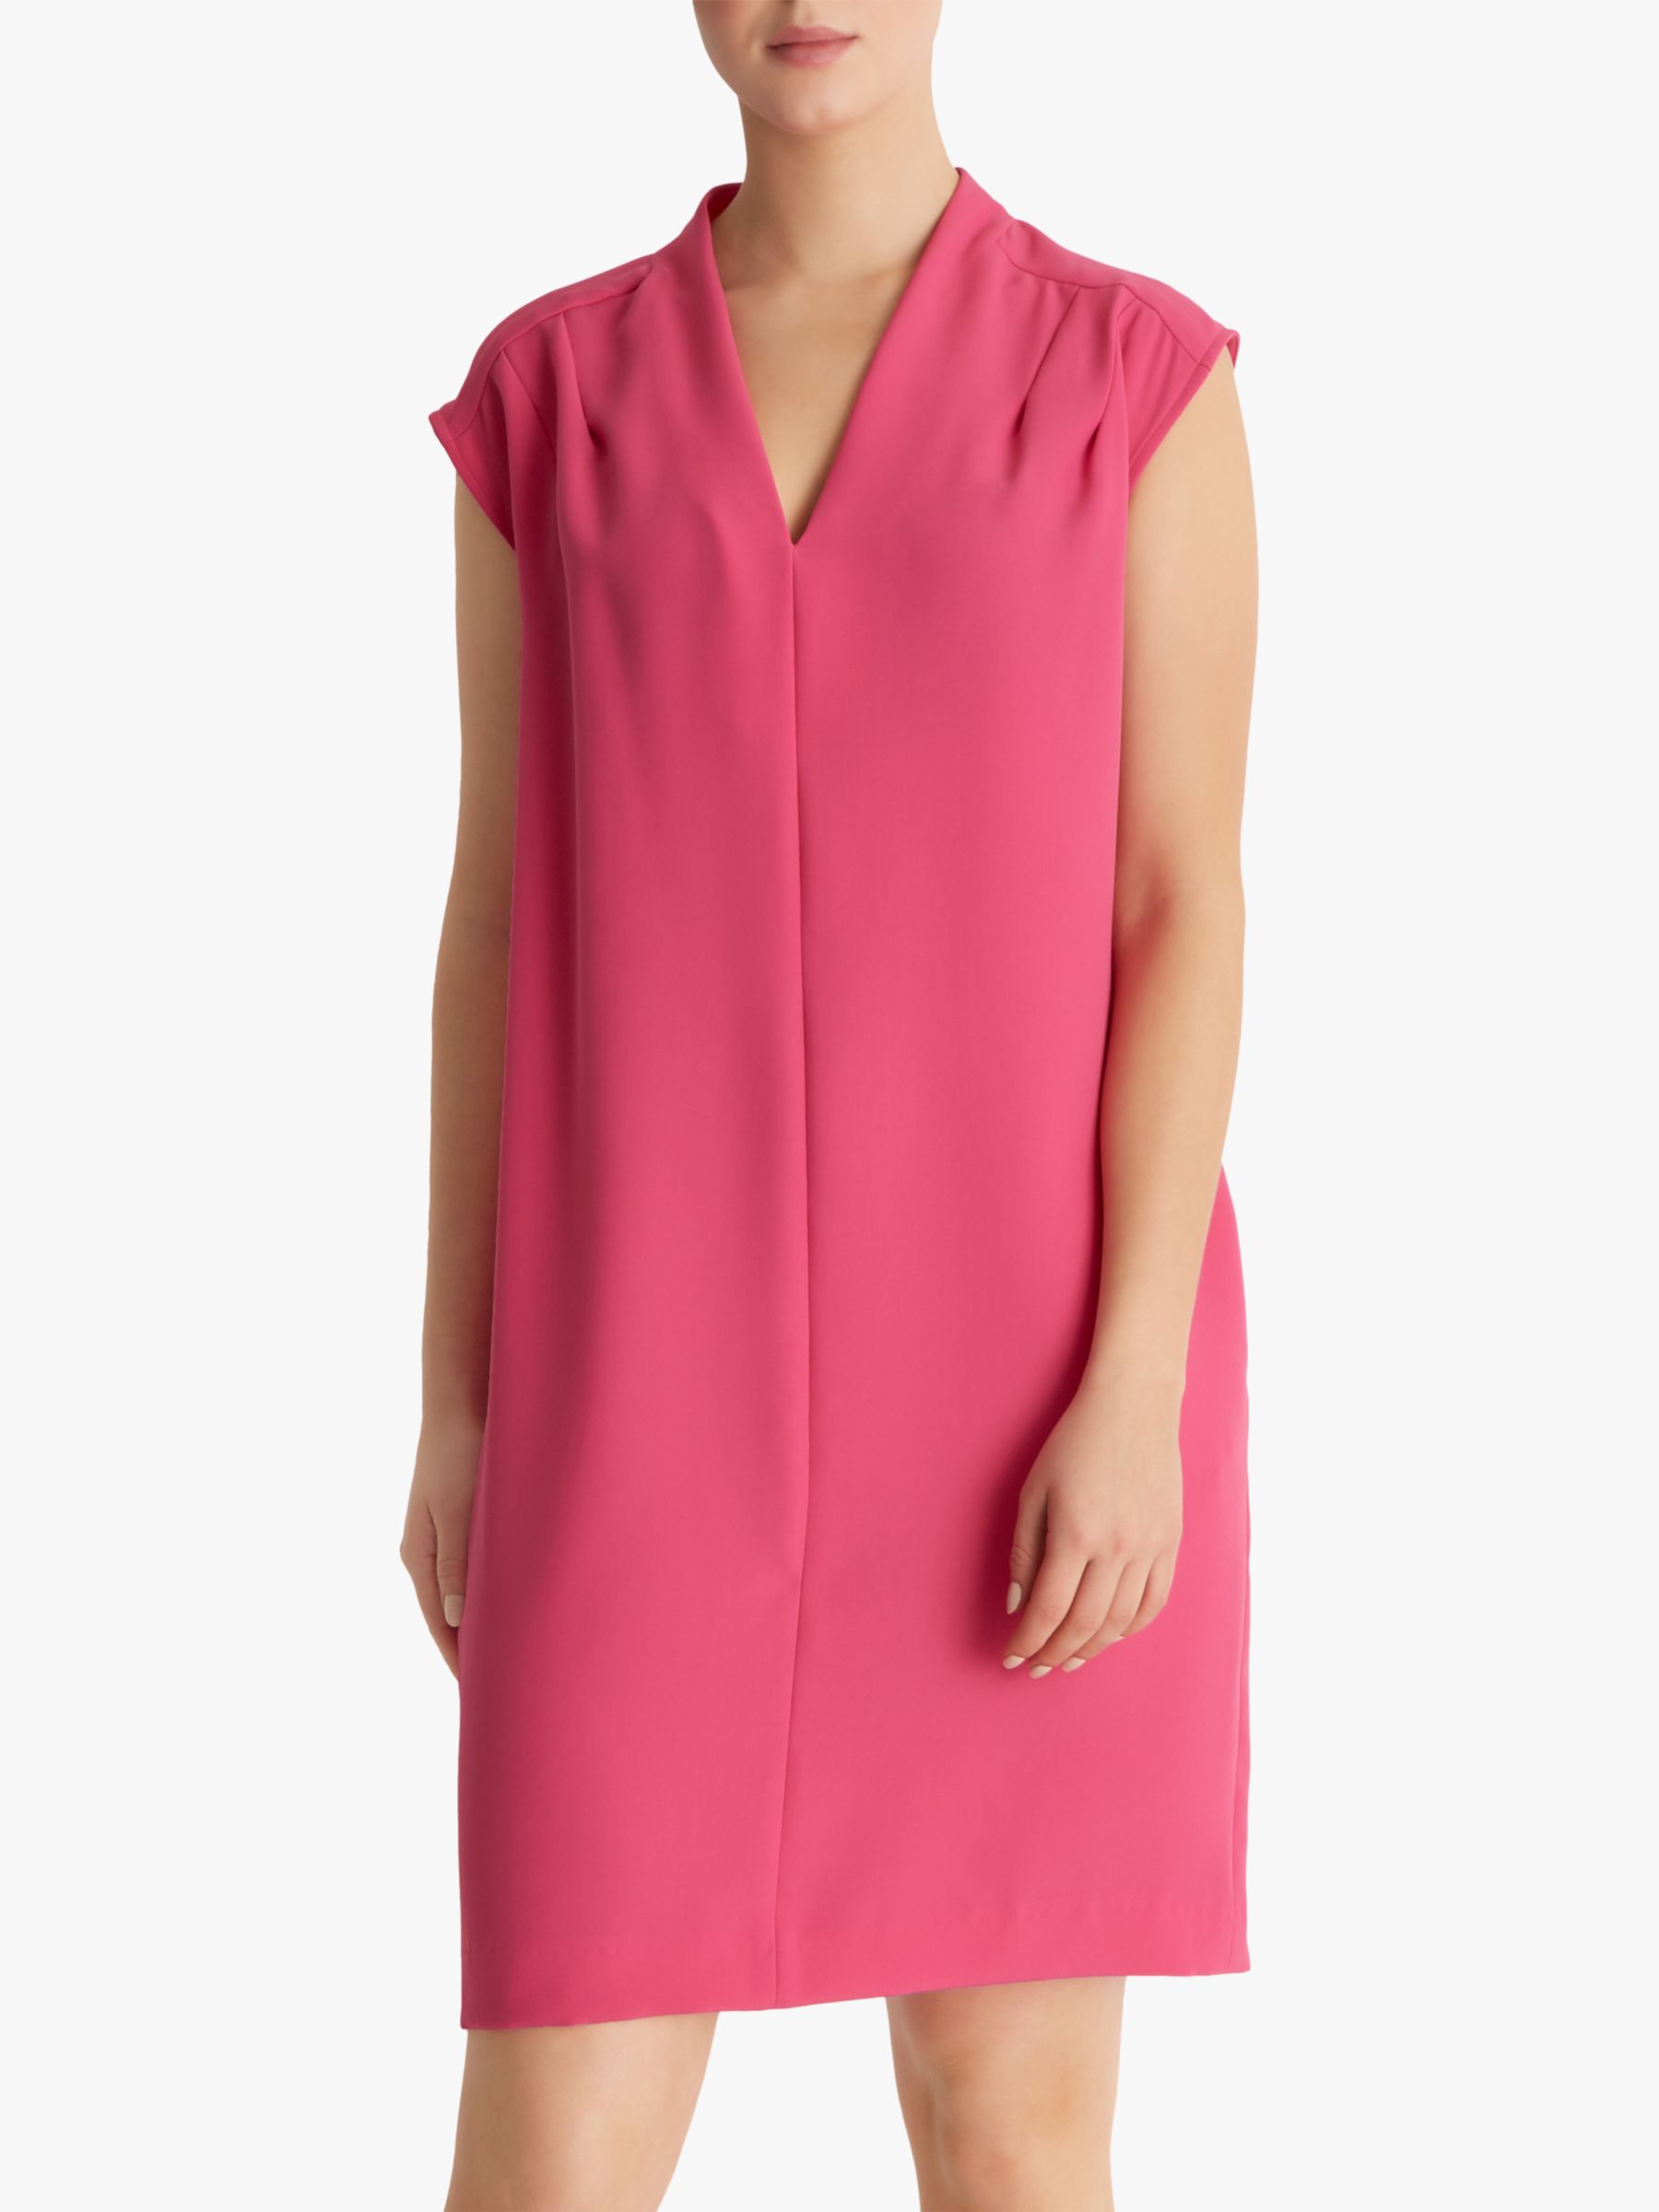 Fenn Wright Manson Raquel Petite Dress, Pink